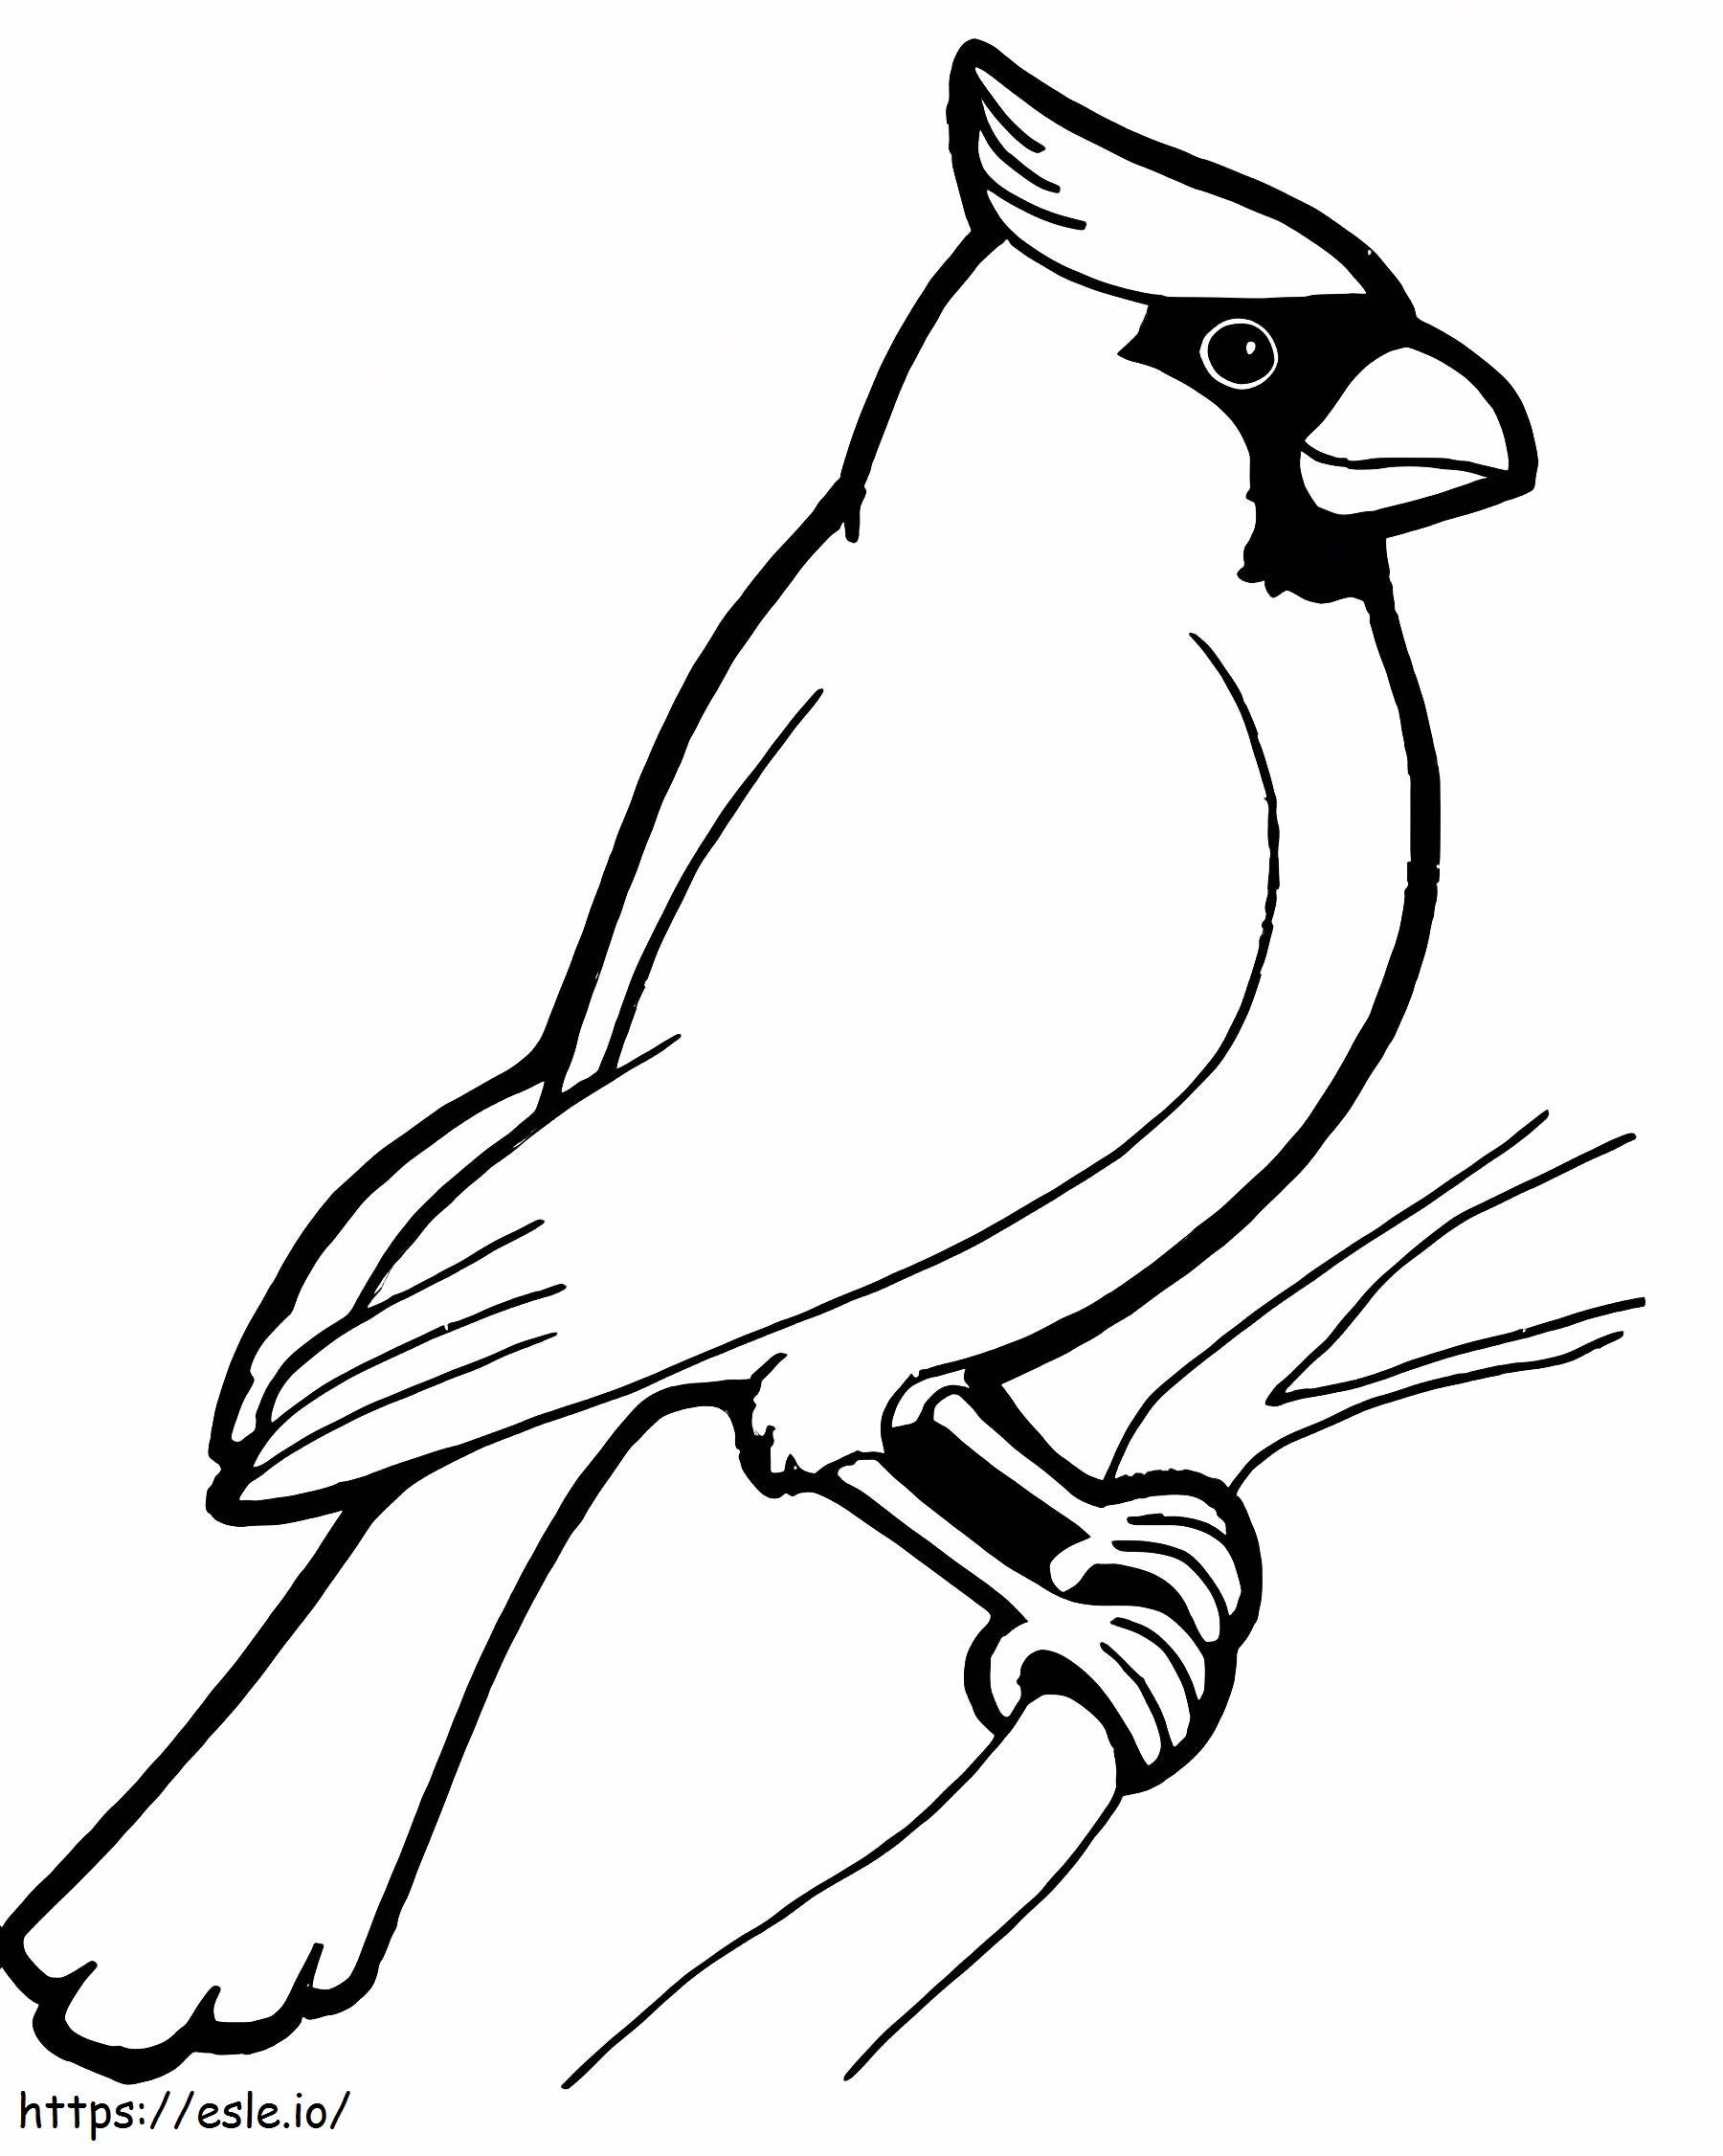 Basic Cardinal coloring page